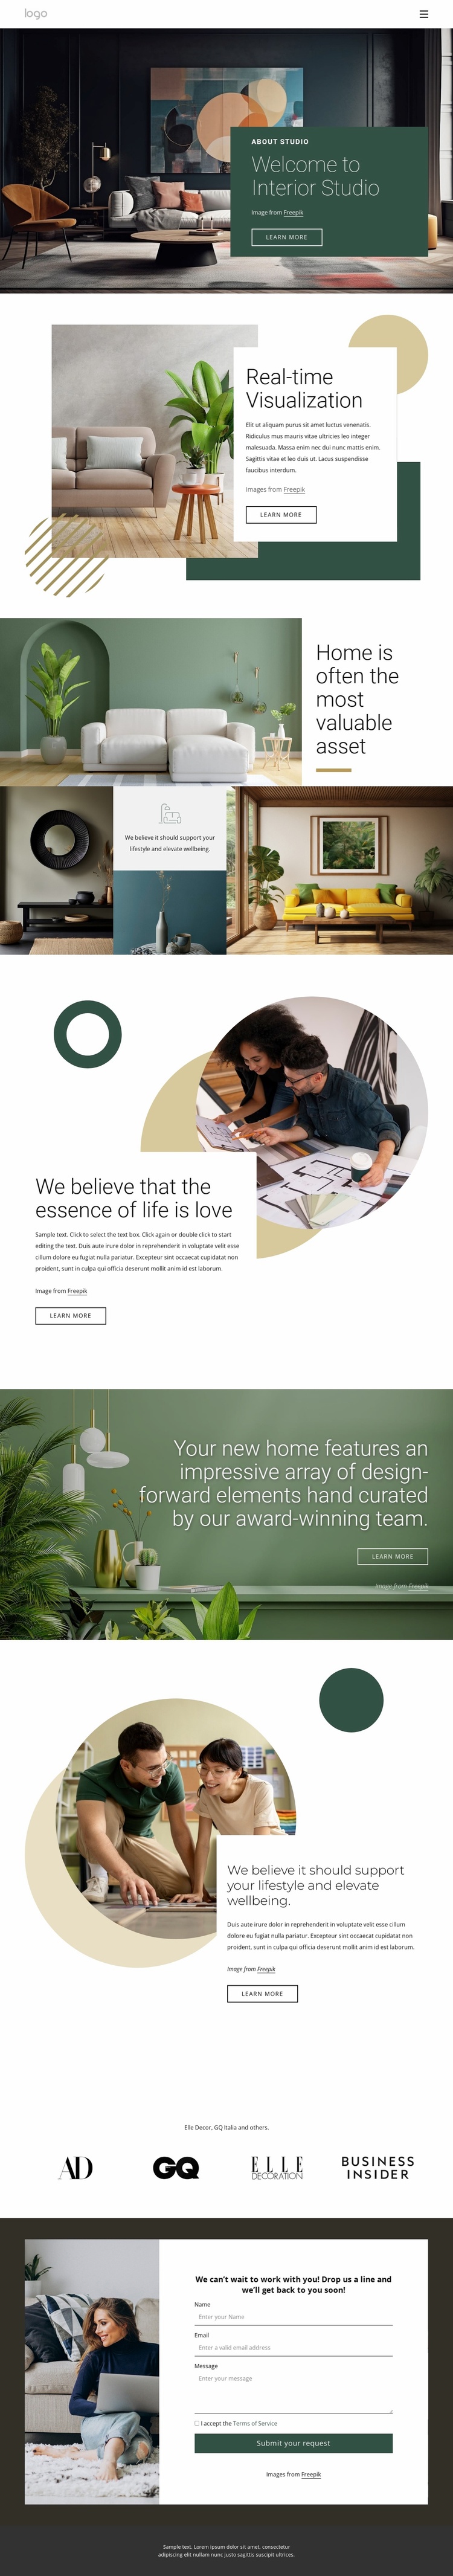 Award-winning interior design studio Landing Page